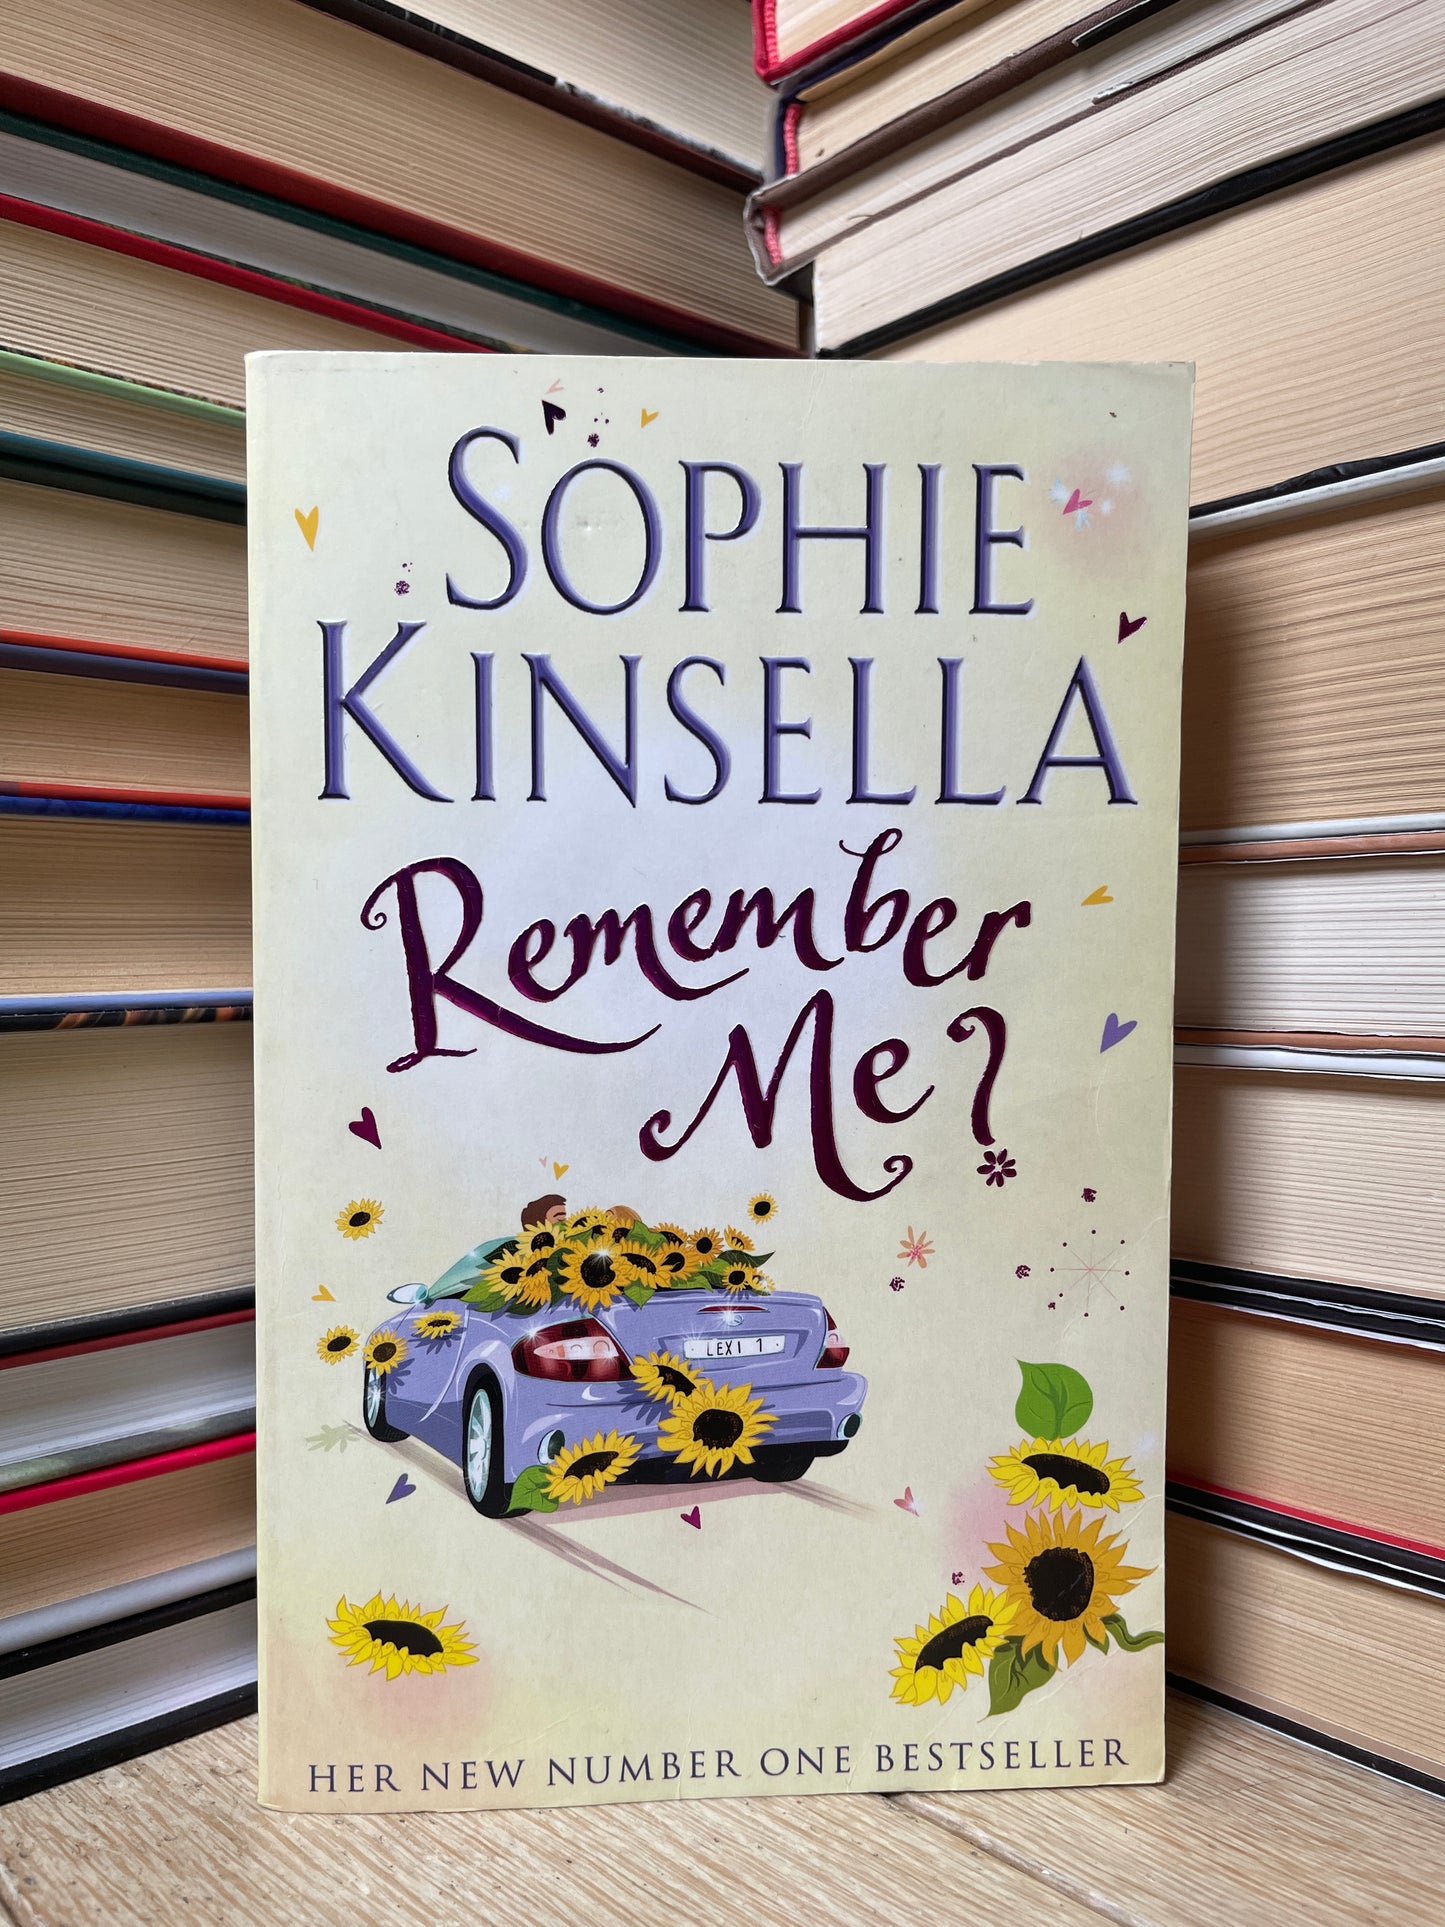 Sophie Kinsella - Remember Me?